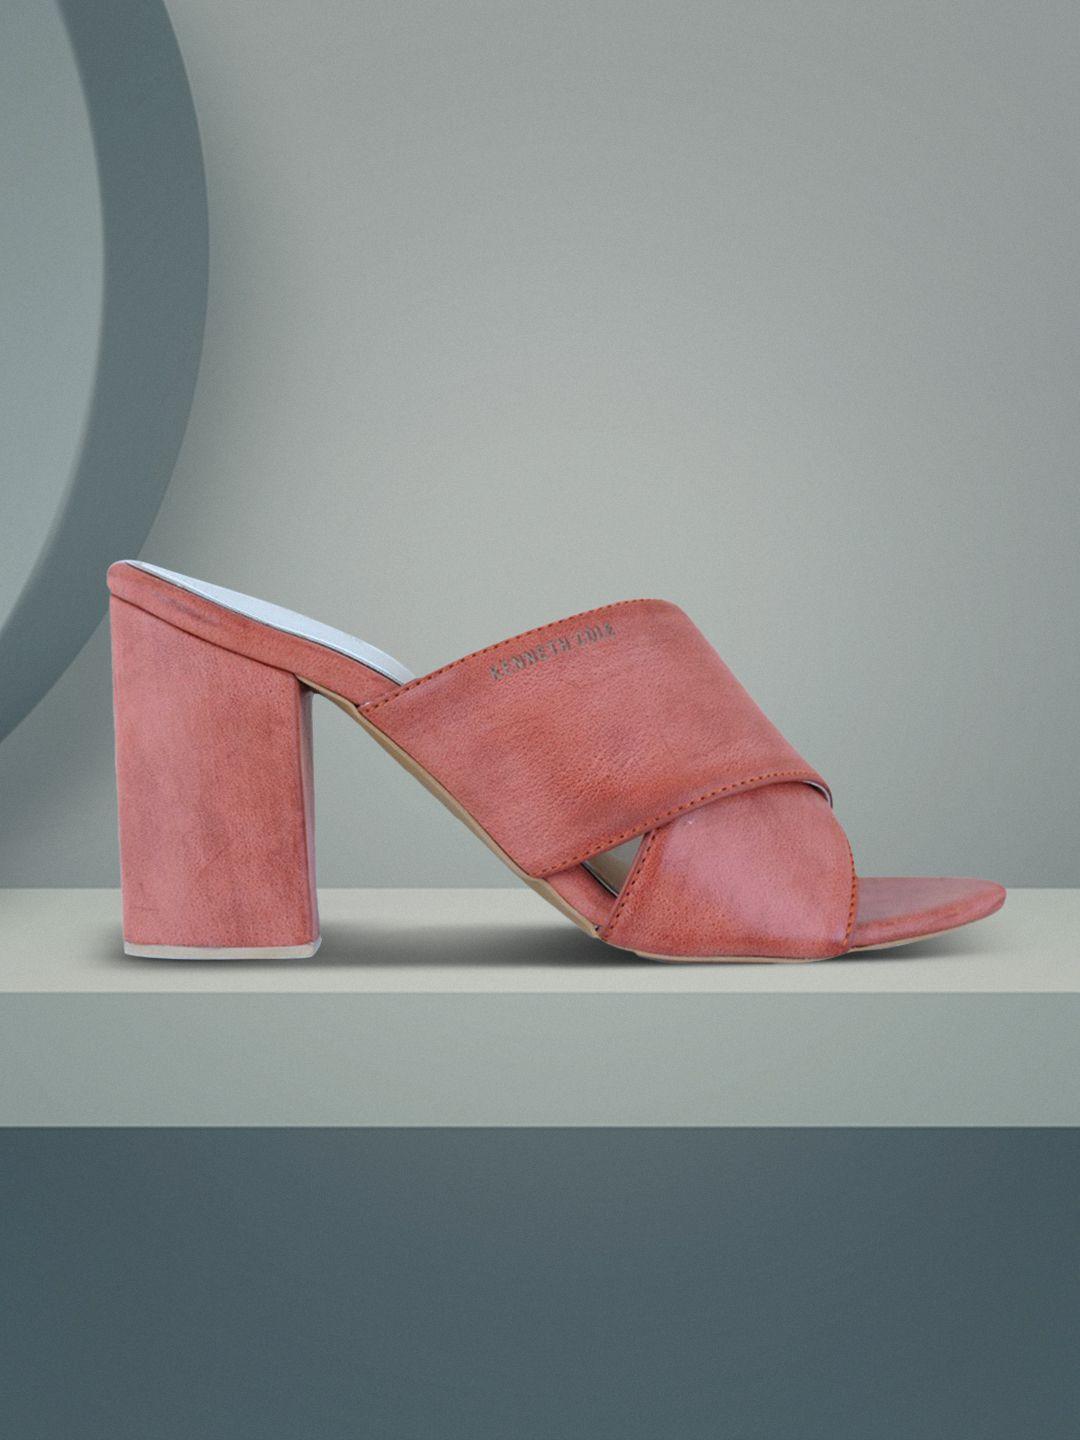 kenneth-cole-women-orange-solid-block-leather-heels